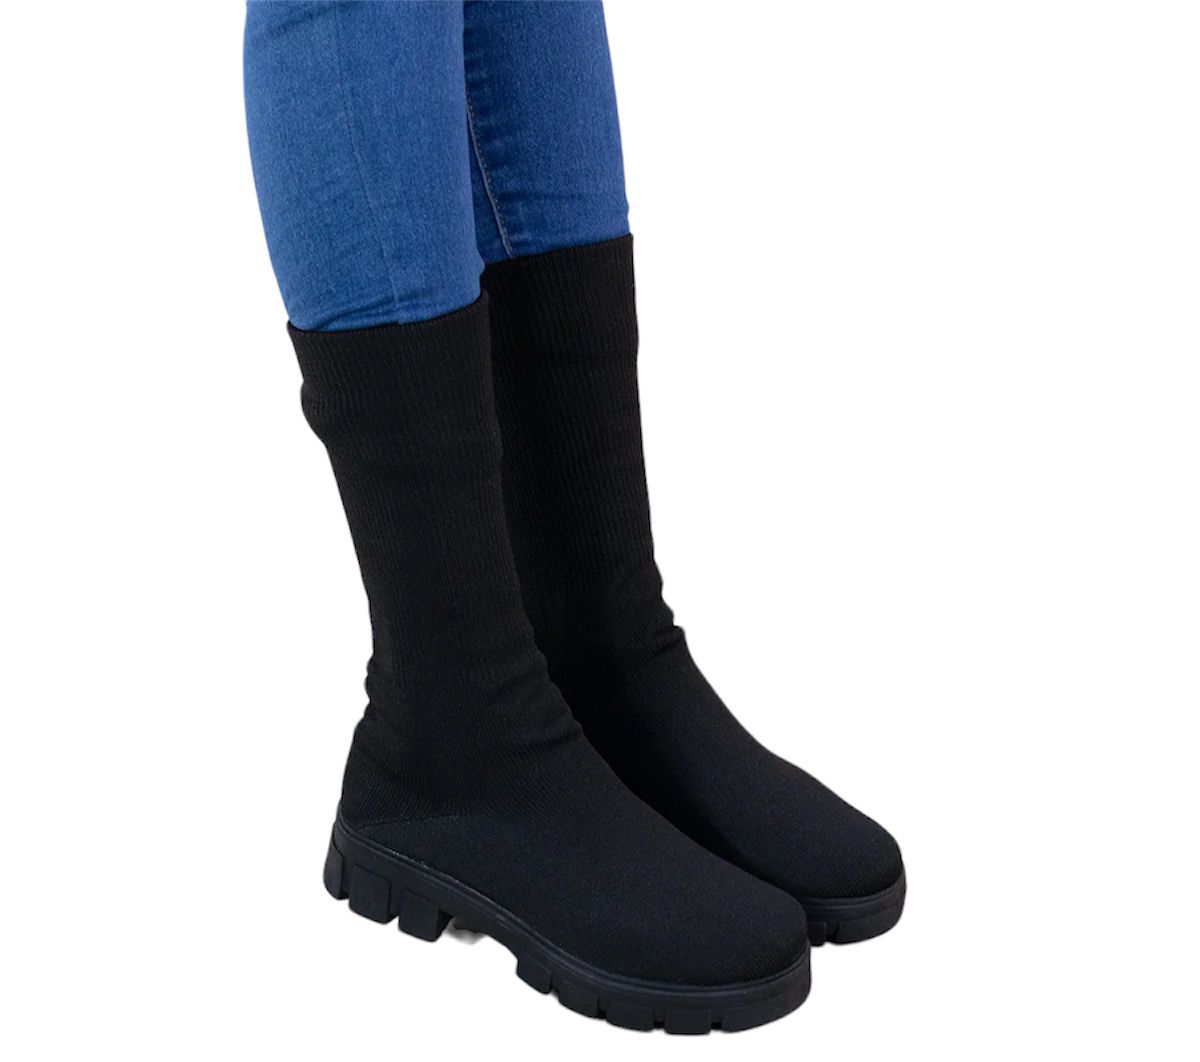 Calcetines de mujer negros SOXO a botas de agua - 5,99 €